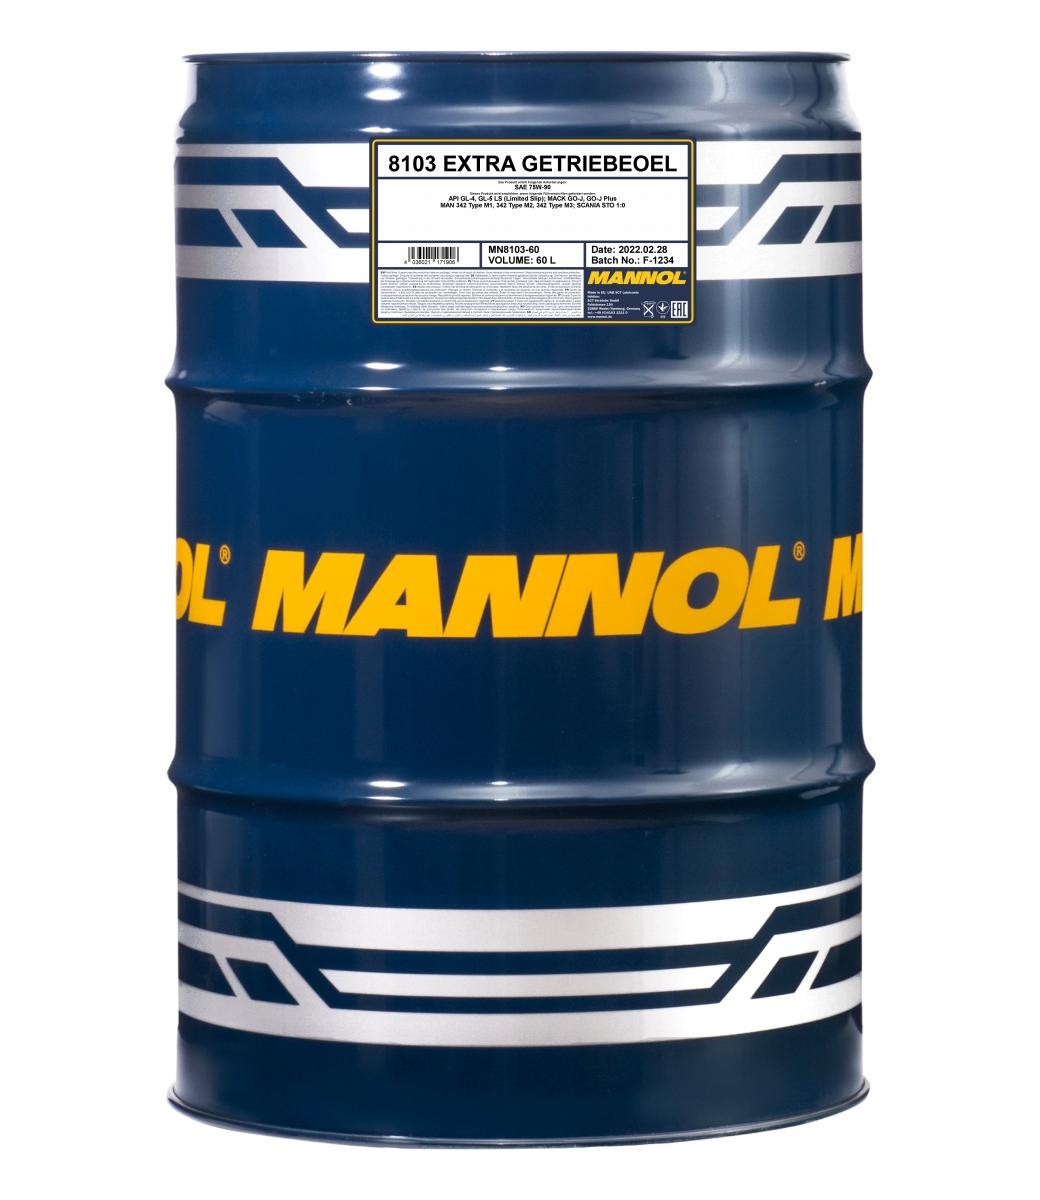 MANNOL Extra GL5, Getriebeoel MN8103-60 Transmission fluid 75W-90, Synthetic Oil, Capacity: 60l